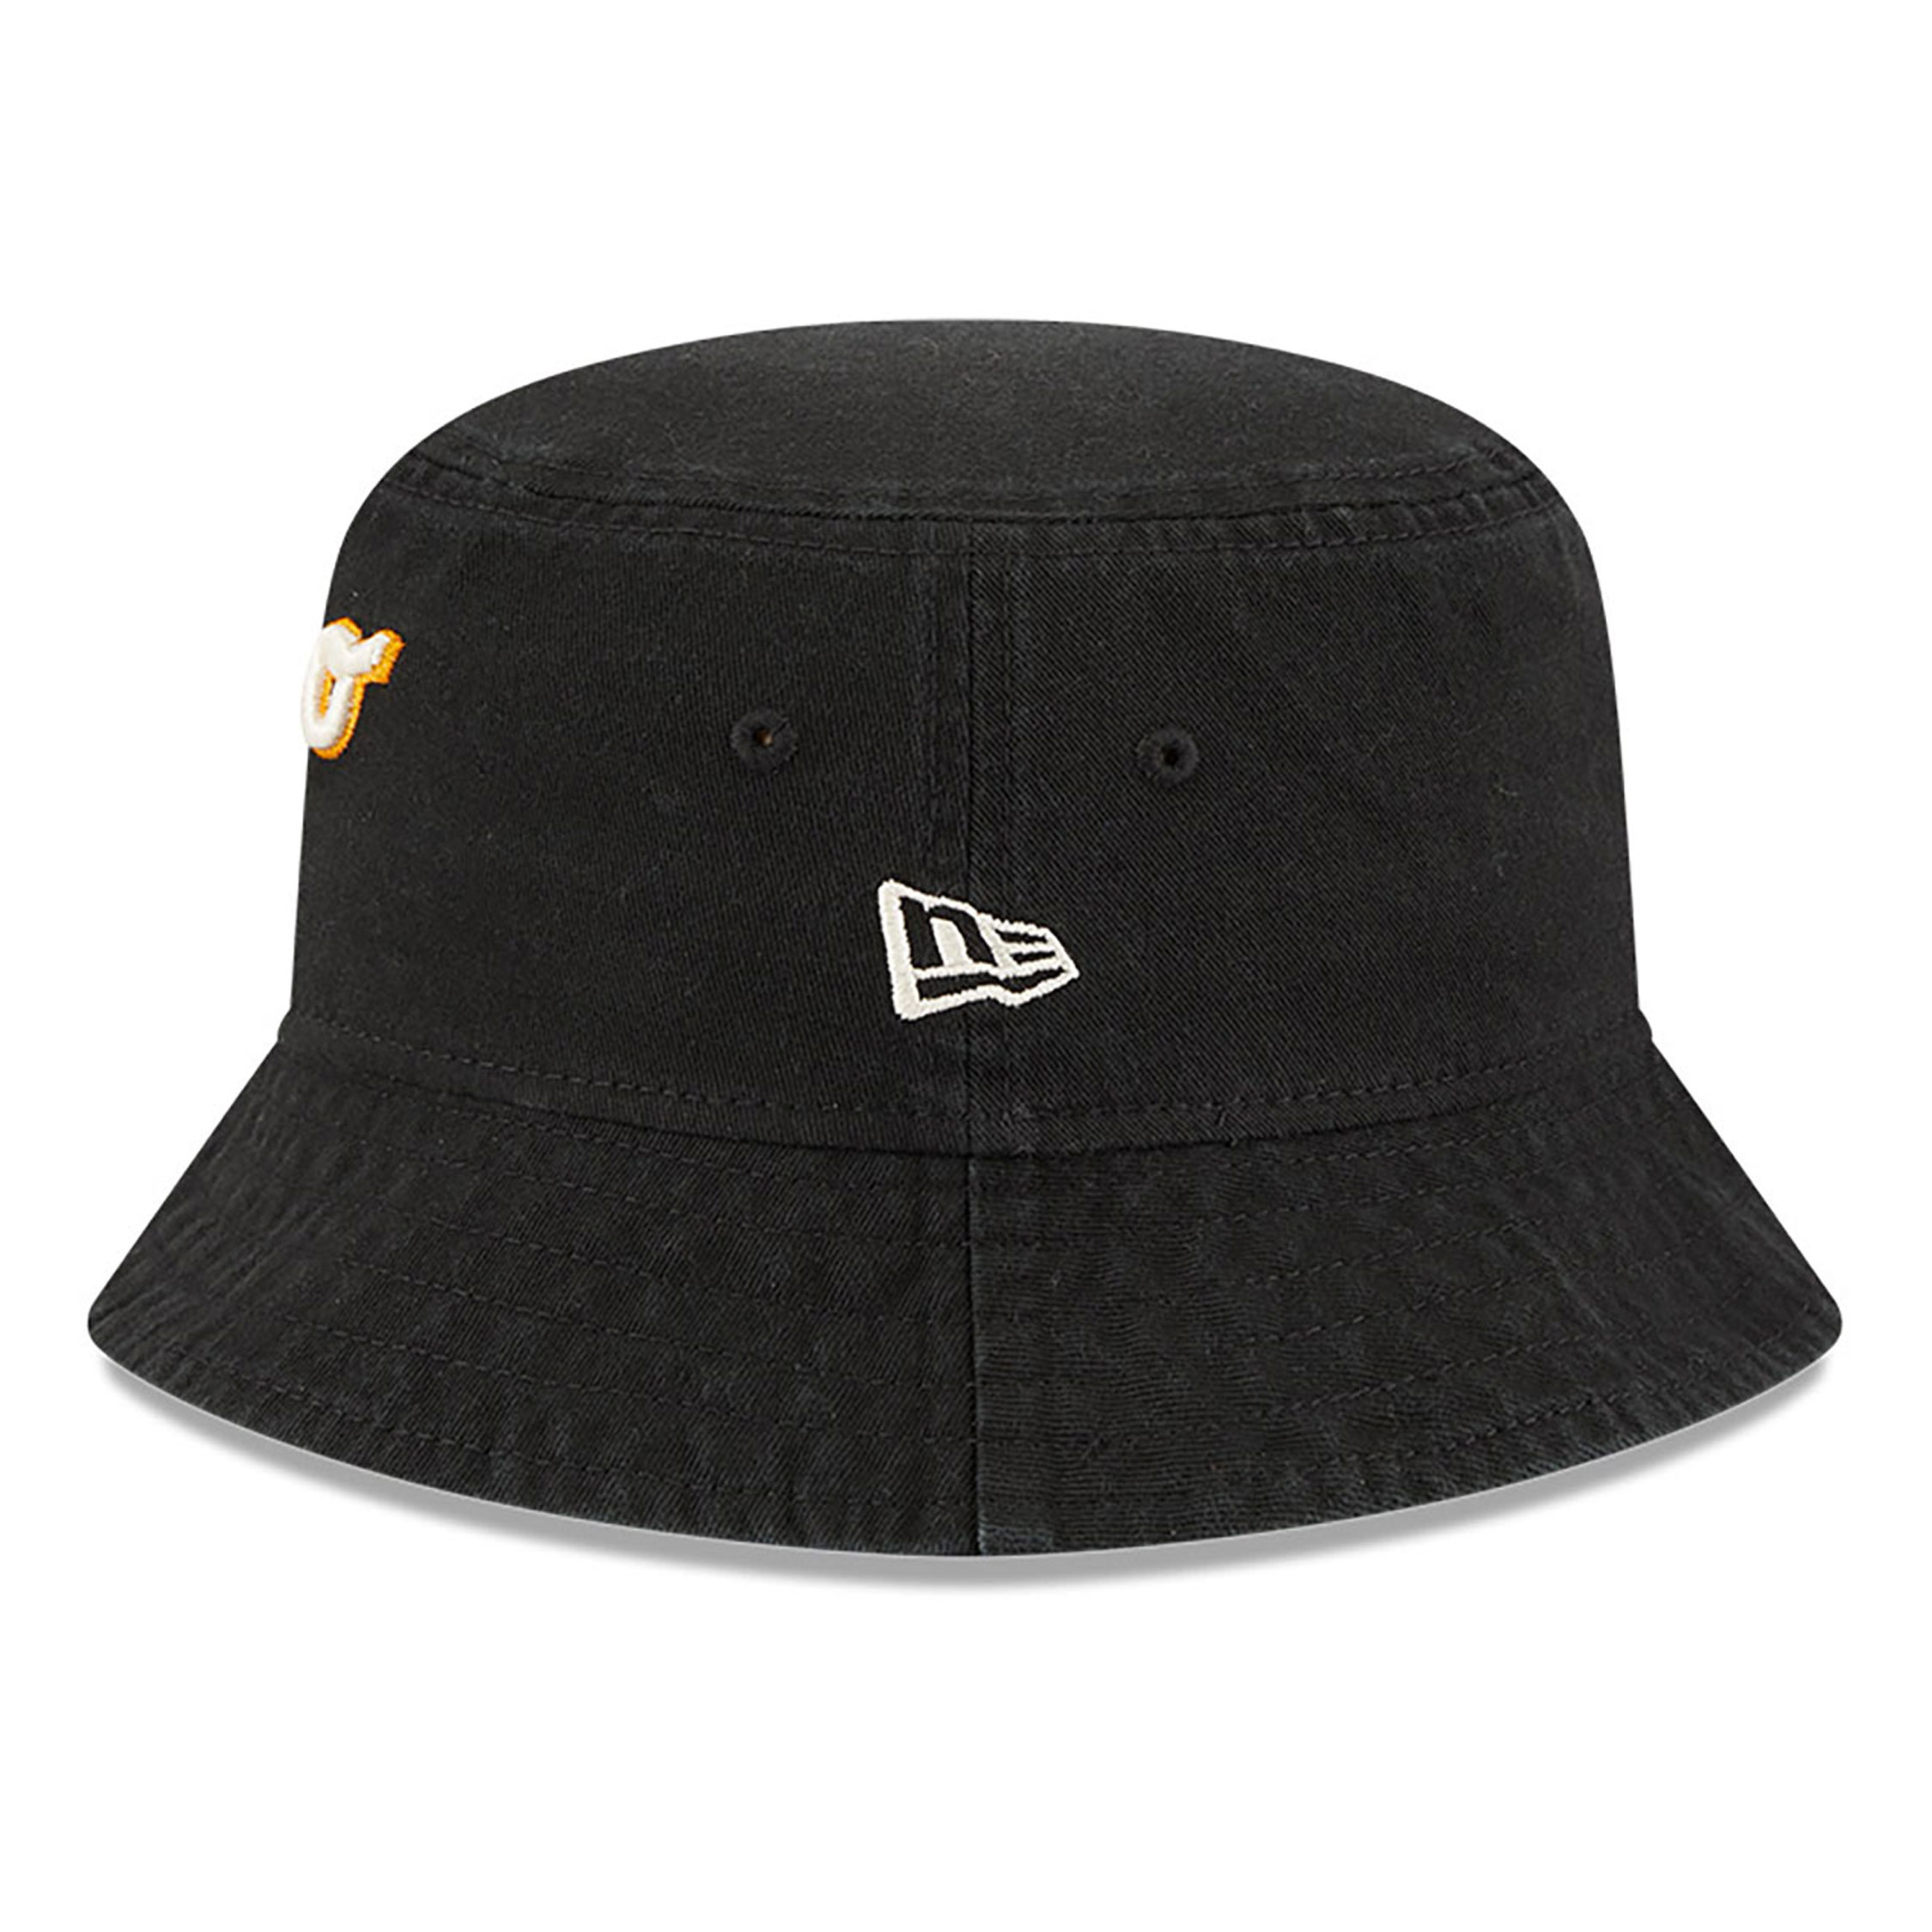 Chicago White Sox Tiramisu Black Bucket Hat